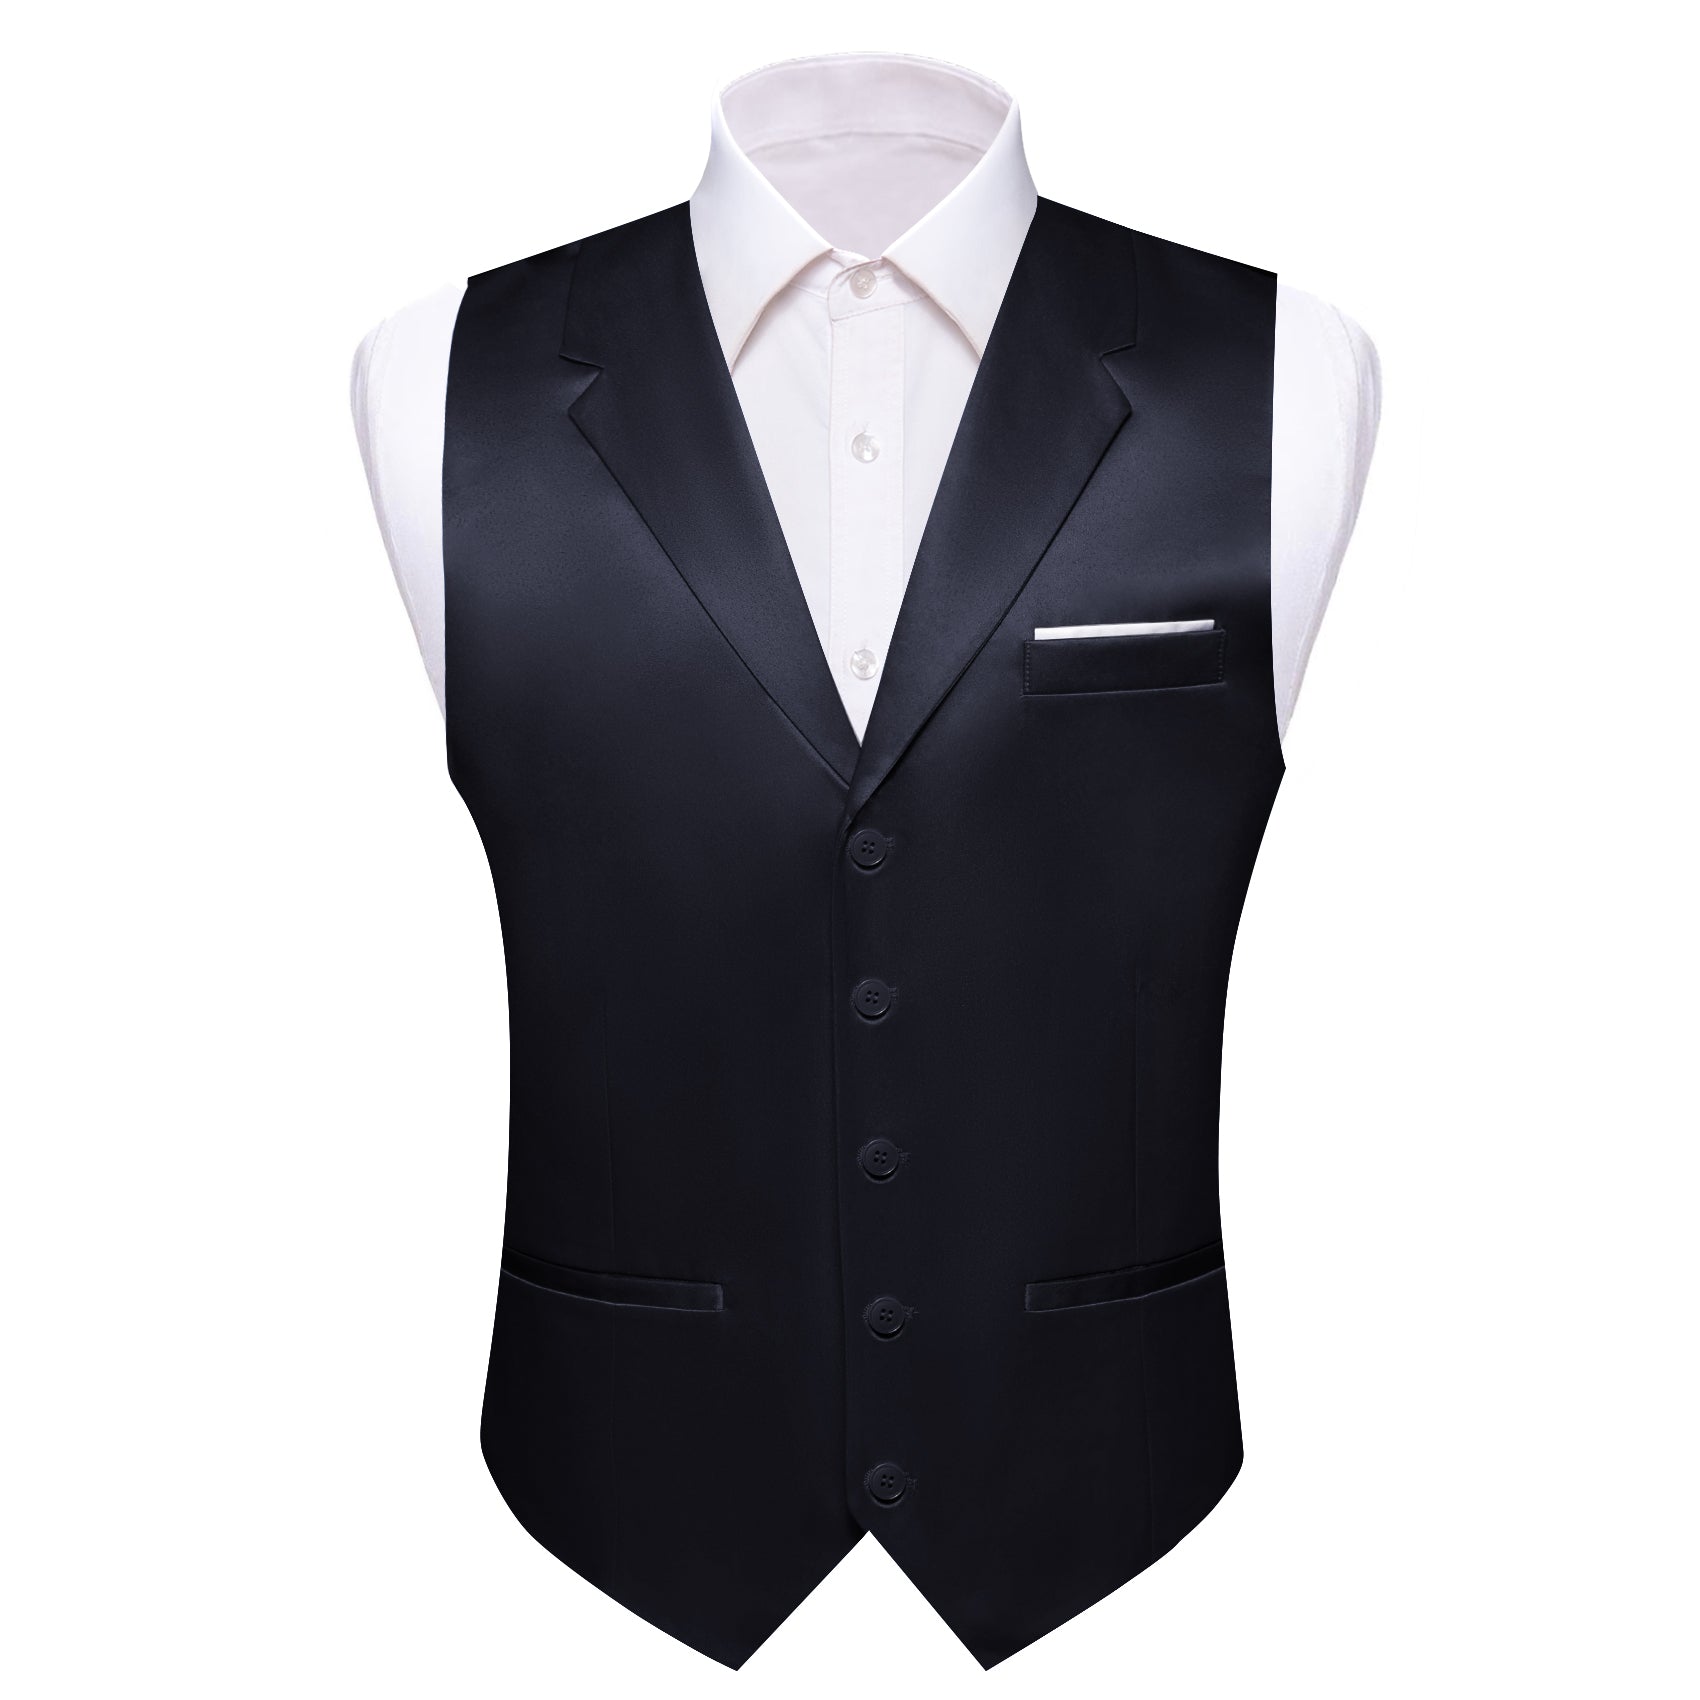 Barry.wang Black Solid Vest Waistcoat Set